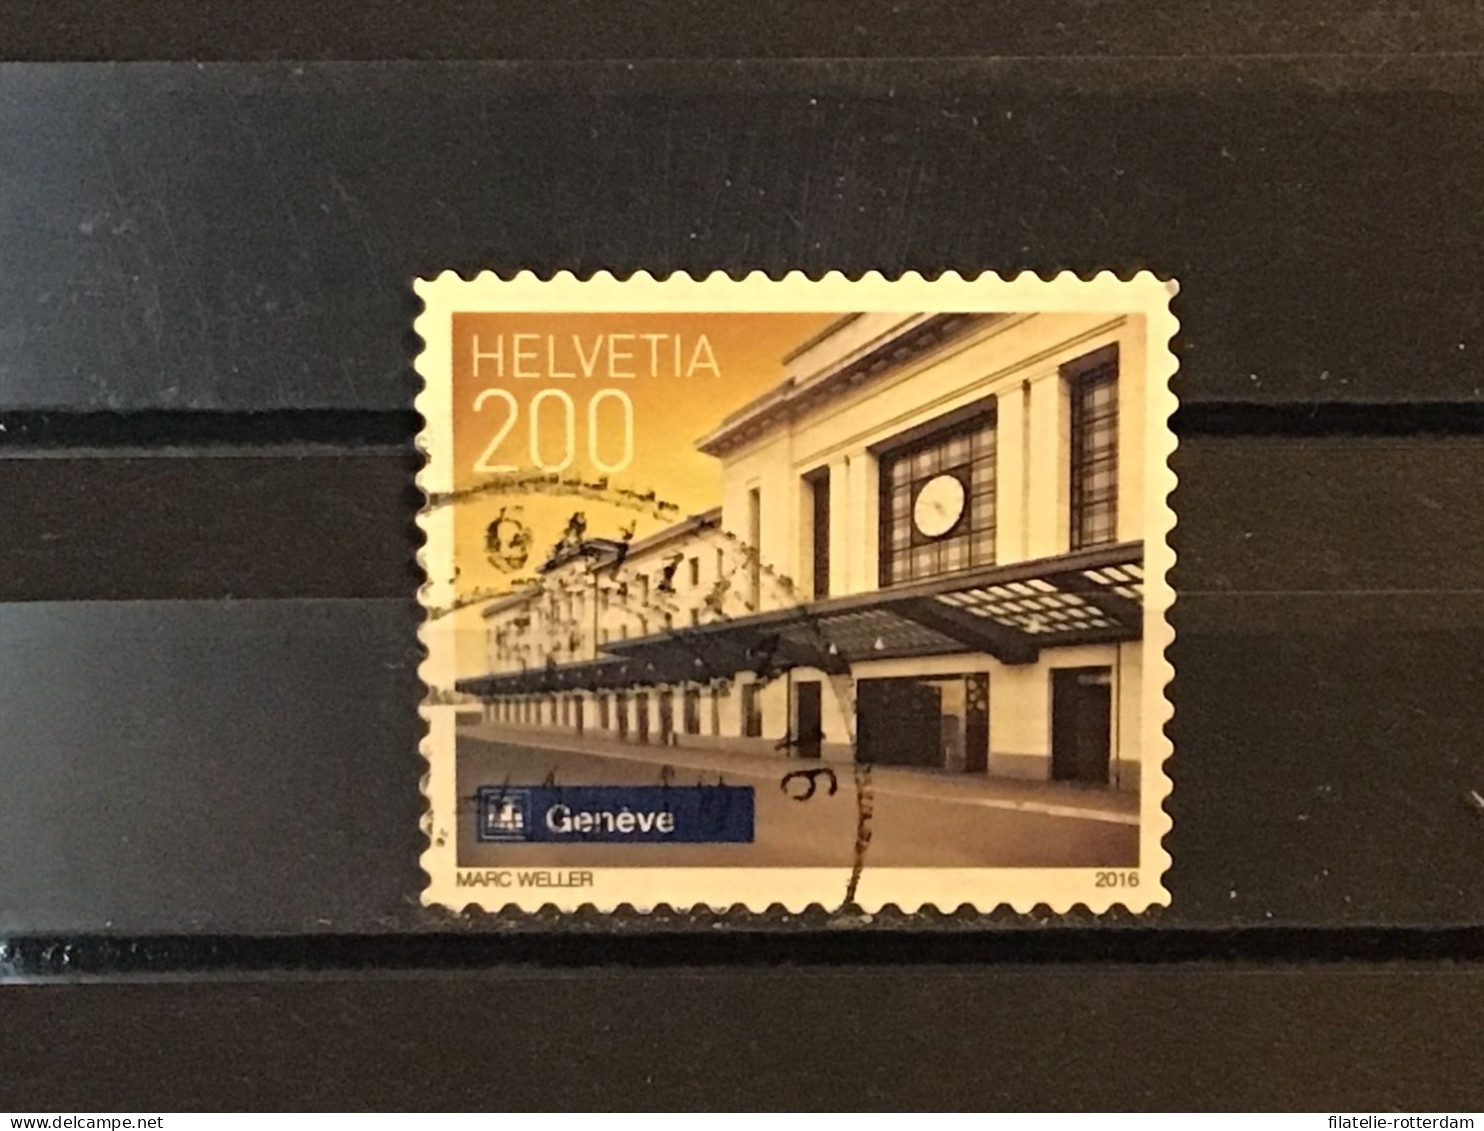 Switzerland / Zwitserland - Train Stations (200) 2016 - Used Stamps